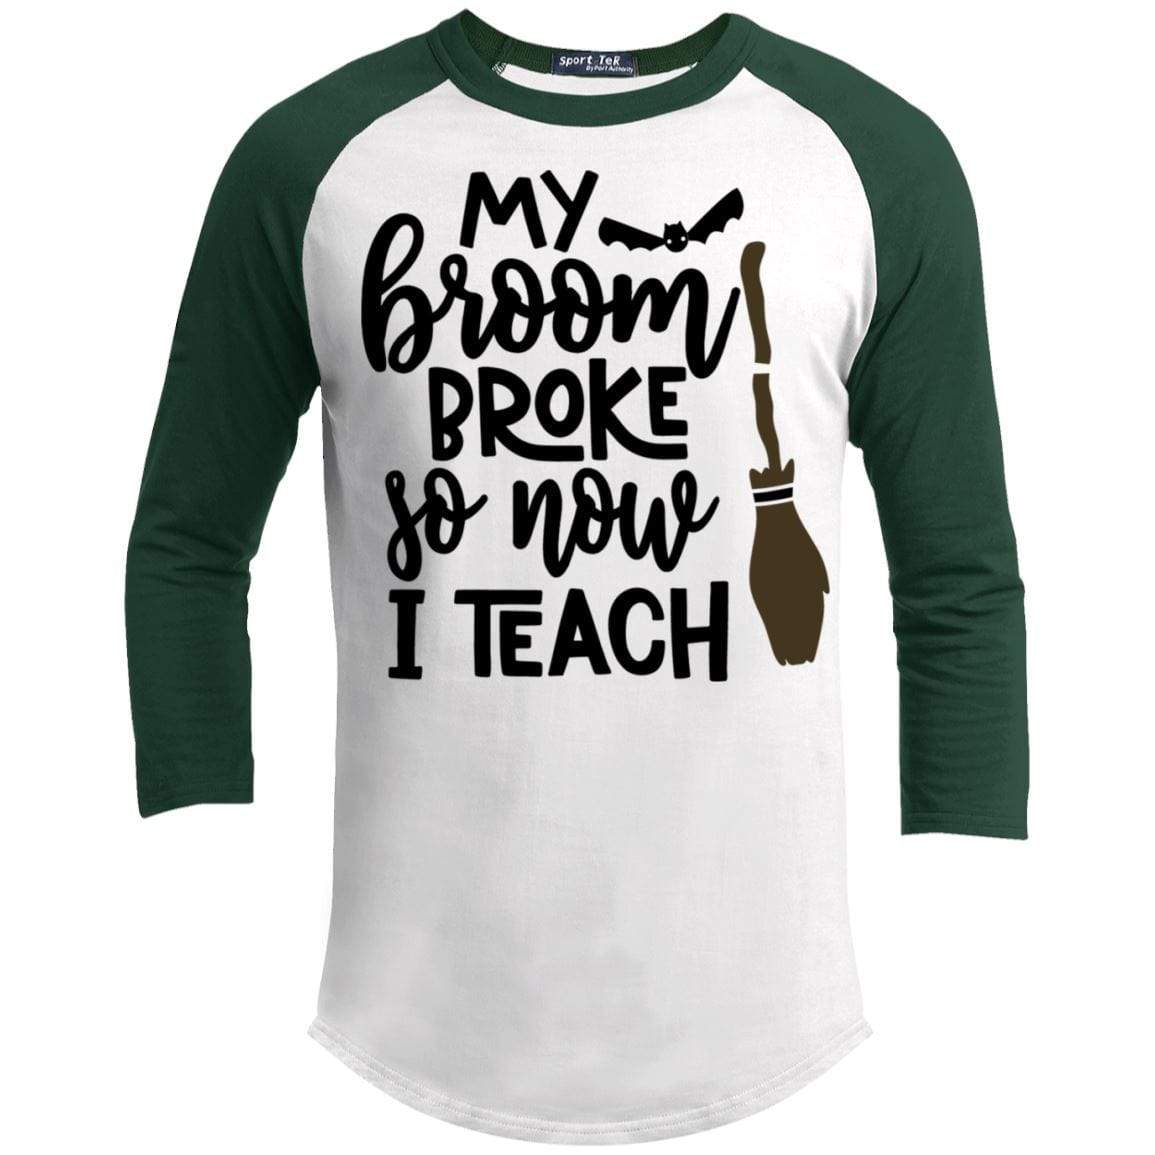 Broom Broke Now I Teach Raglan T-Shirts CustomCat White/Forest X-Small 